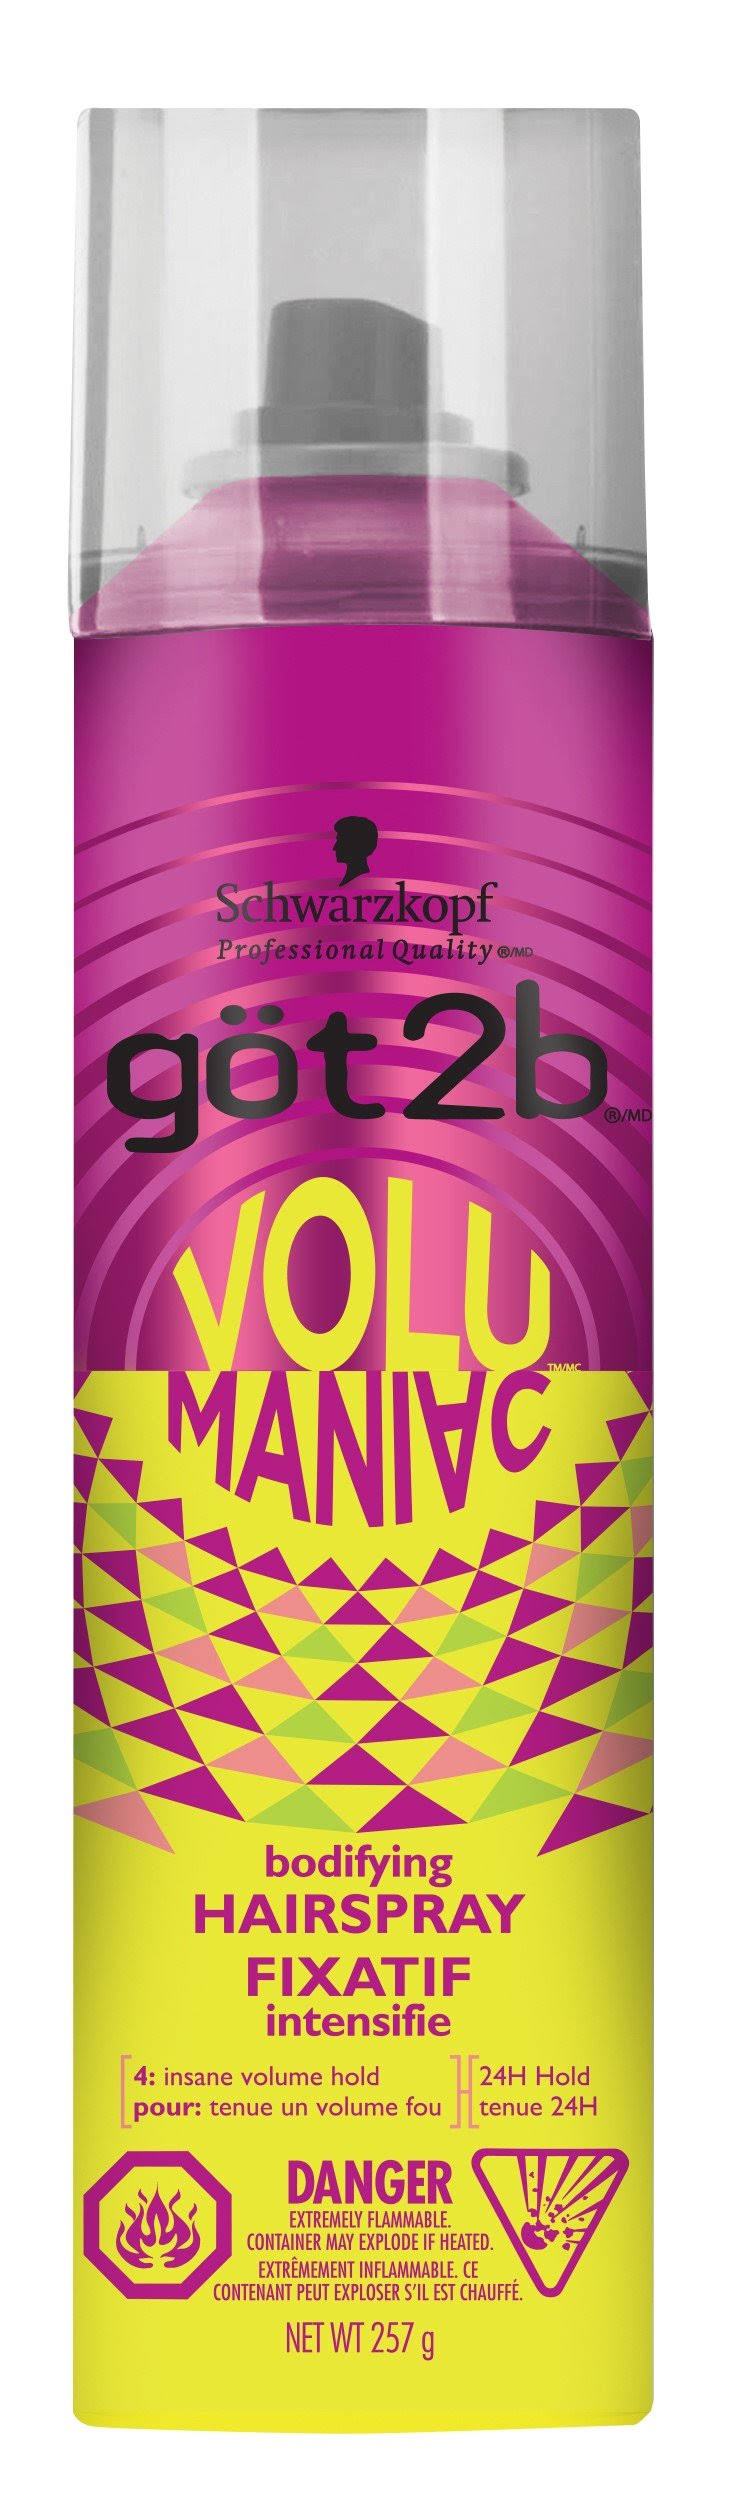 Got2b Volumaniac Bodifying Hairspray - 257g